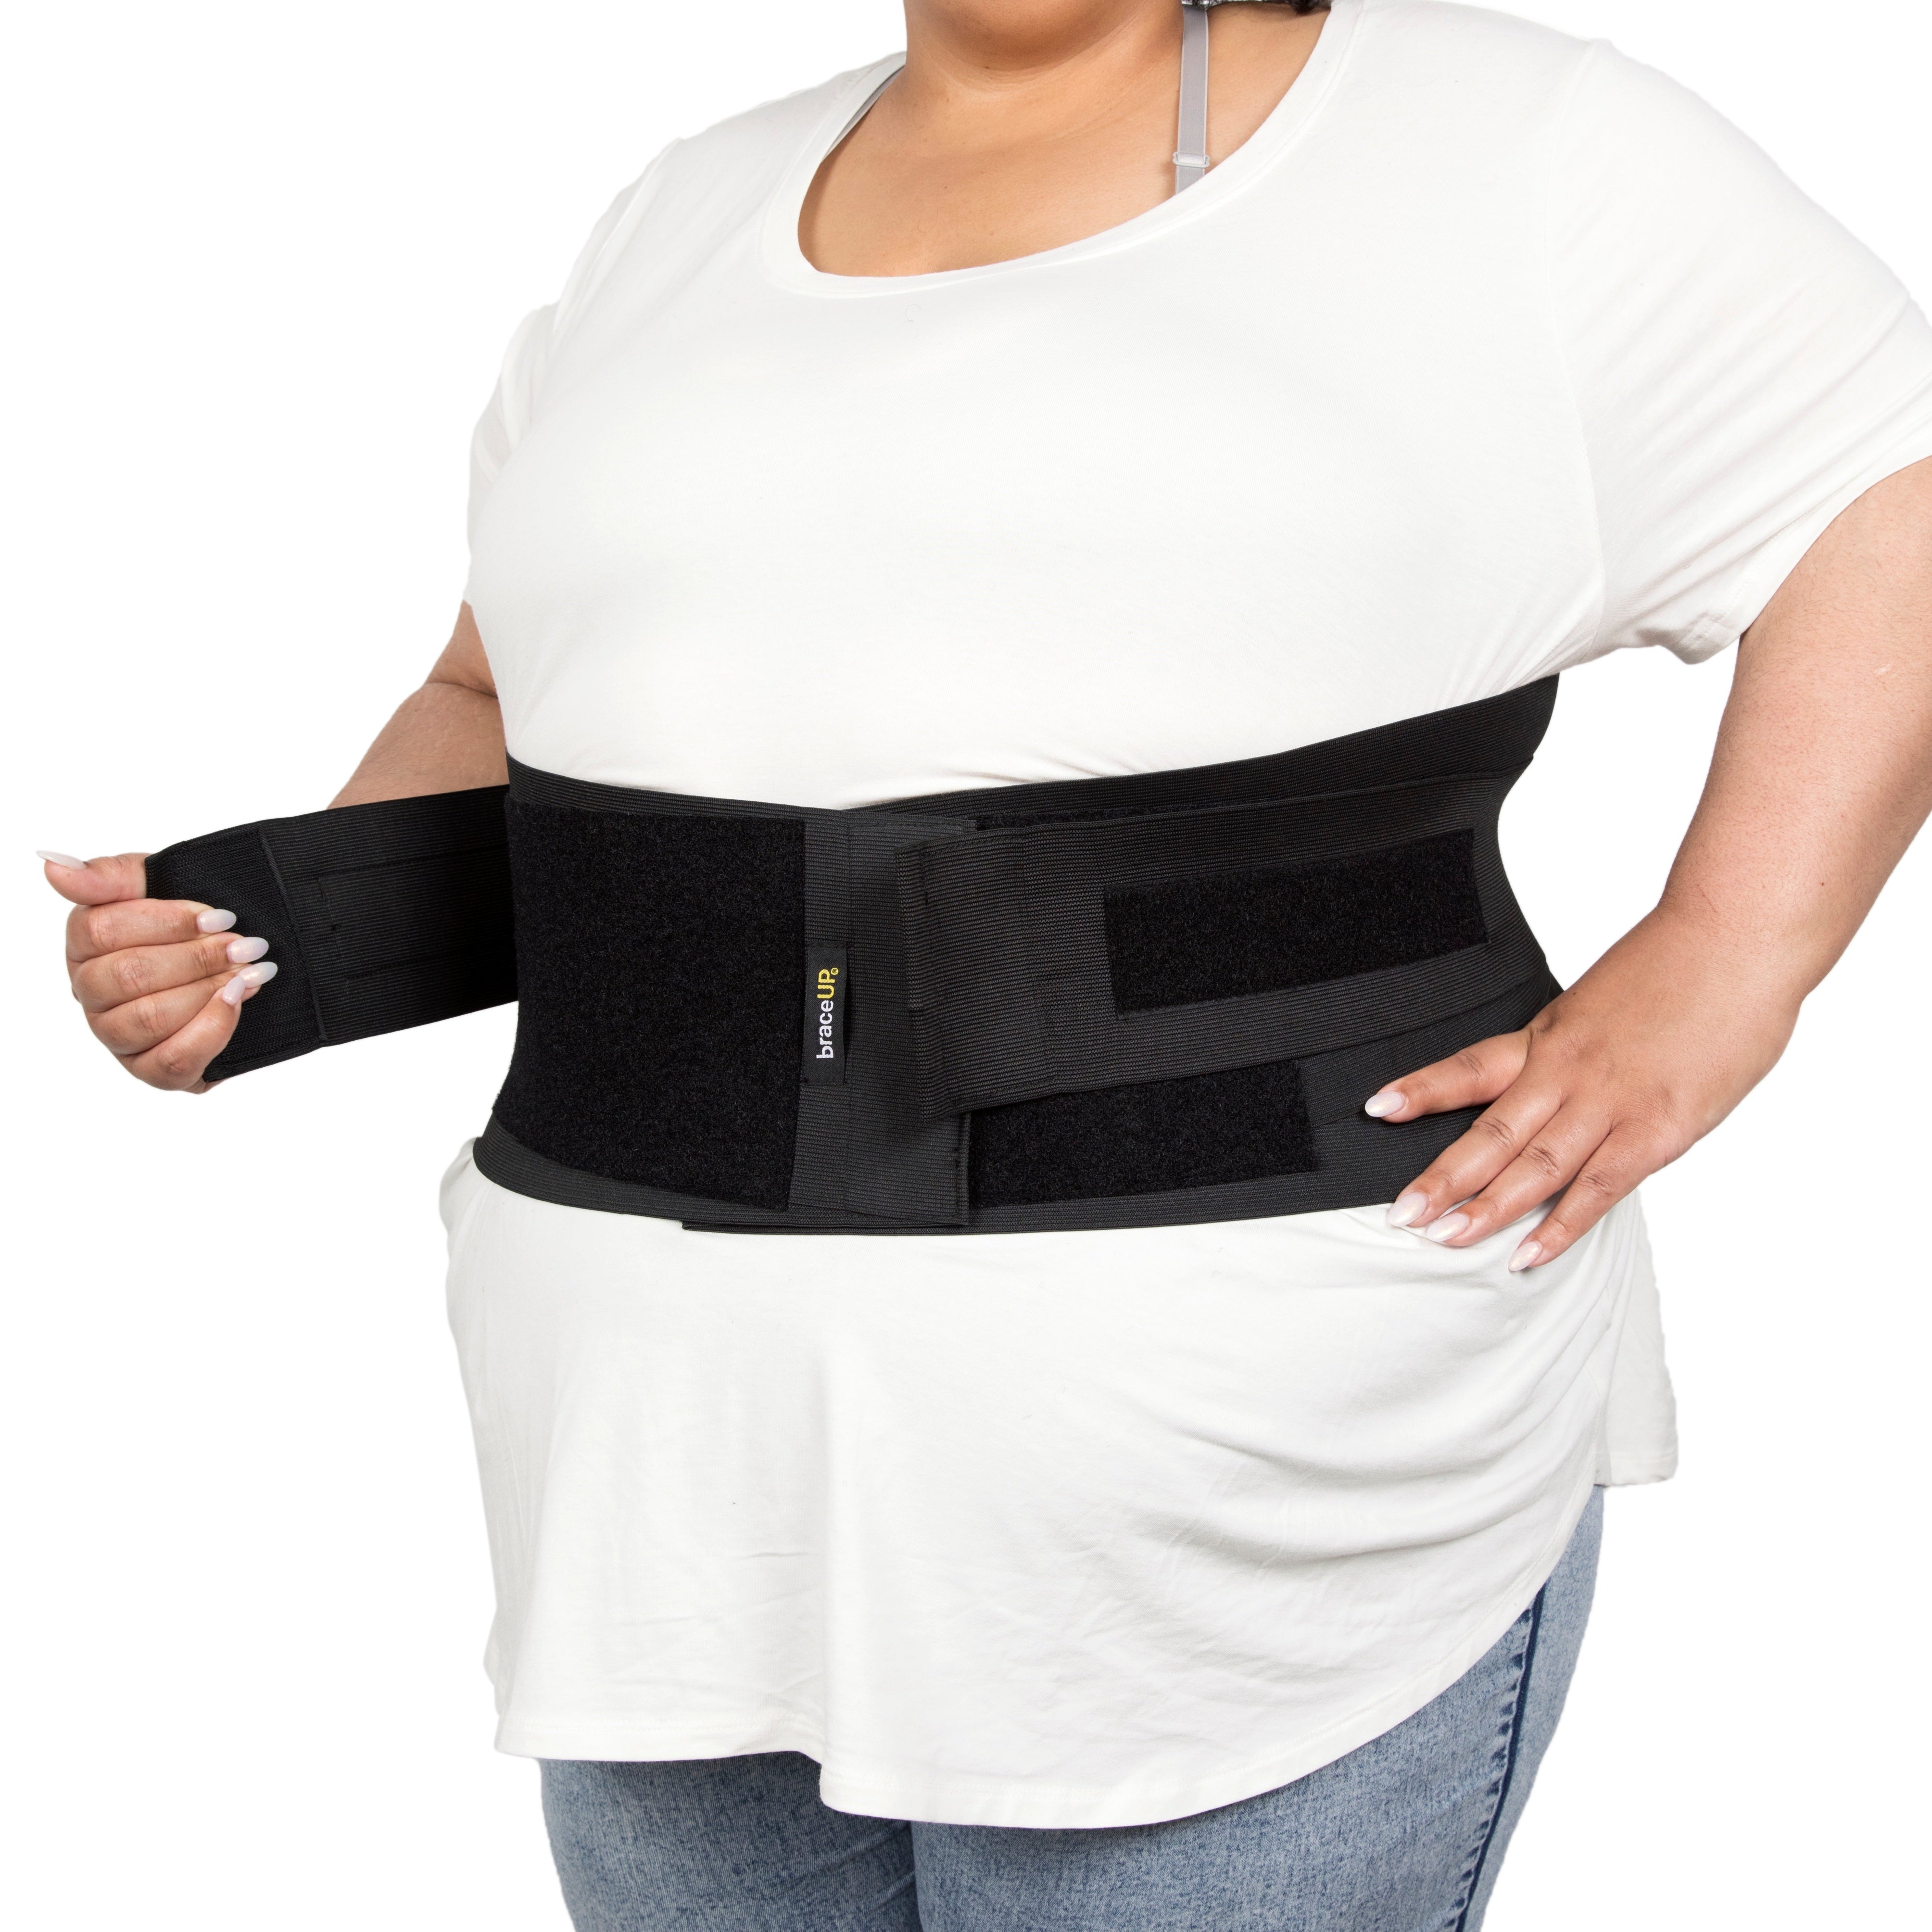 Weightlifting Belt for Men and Women 4-inch Wide Weight Belt – BraceUP